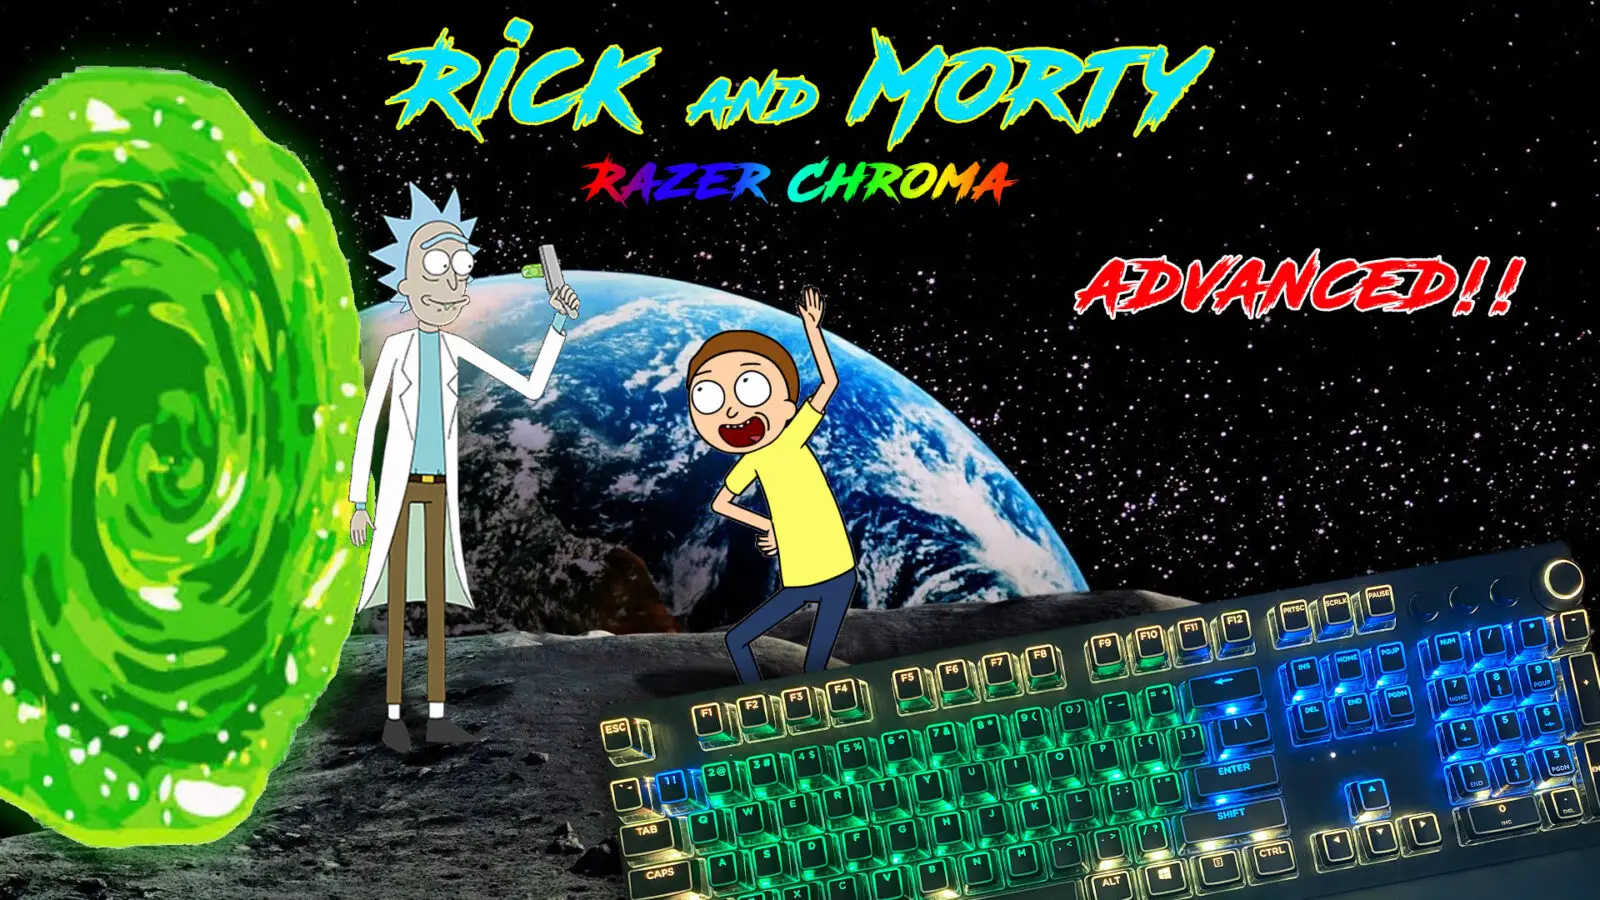 Rick and Morty Razer Chroma Profile